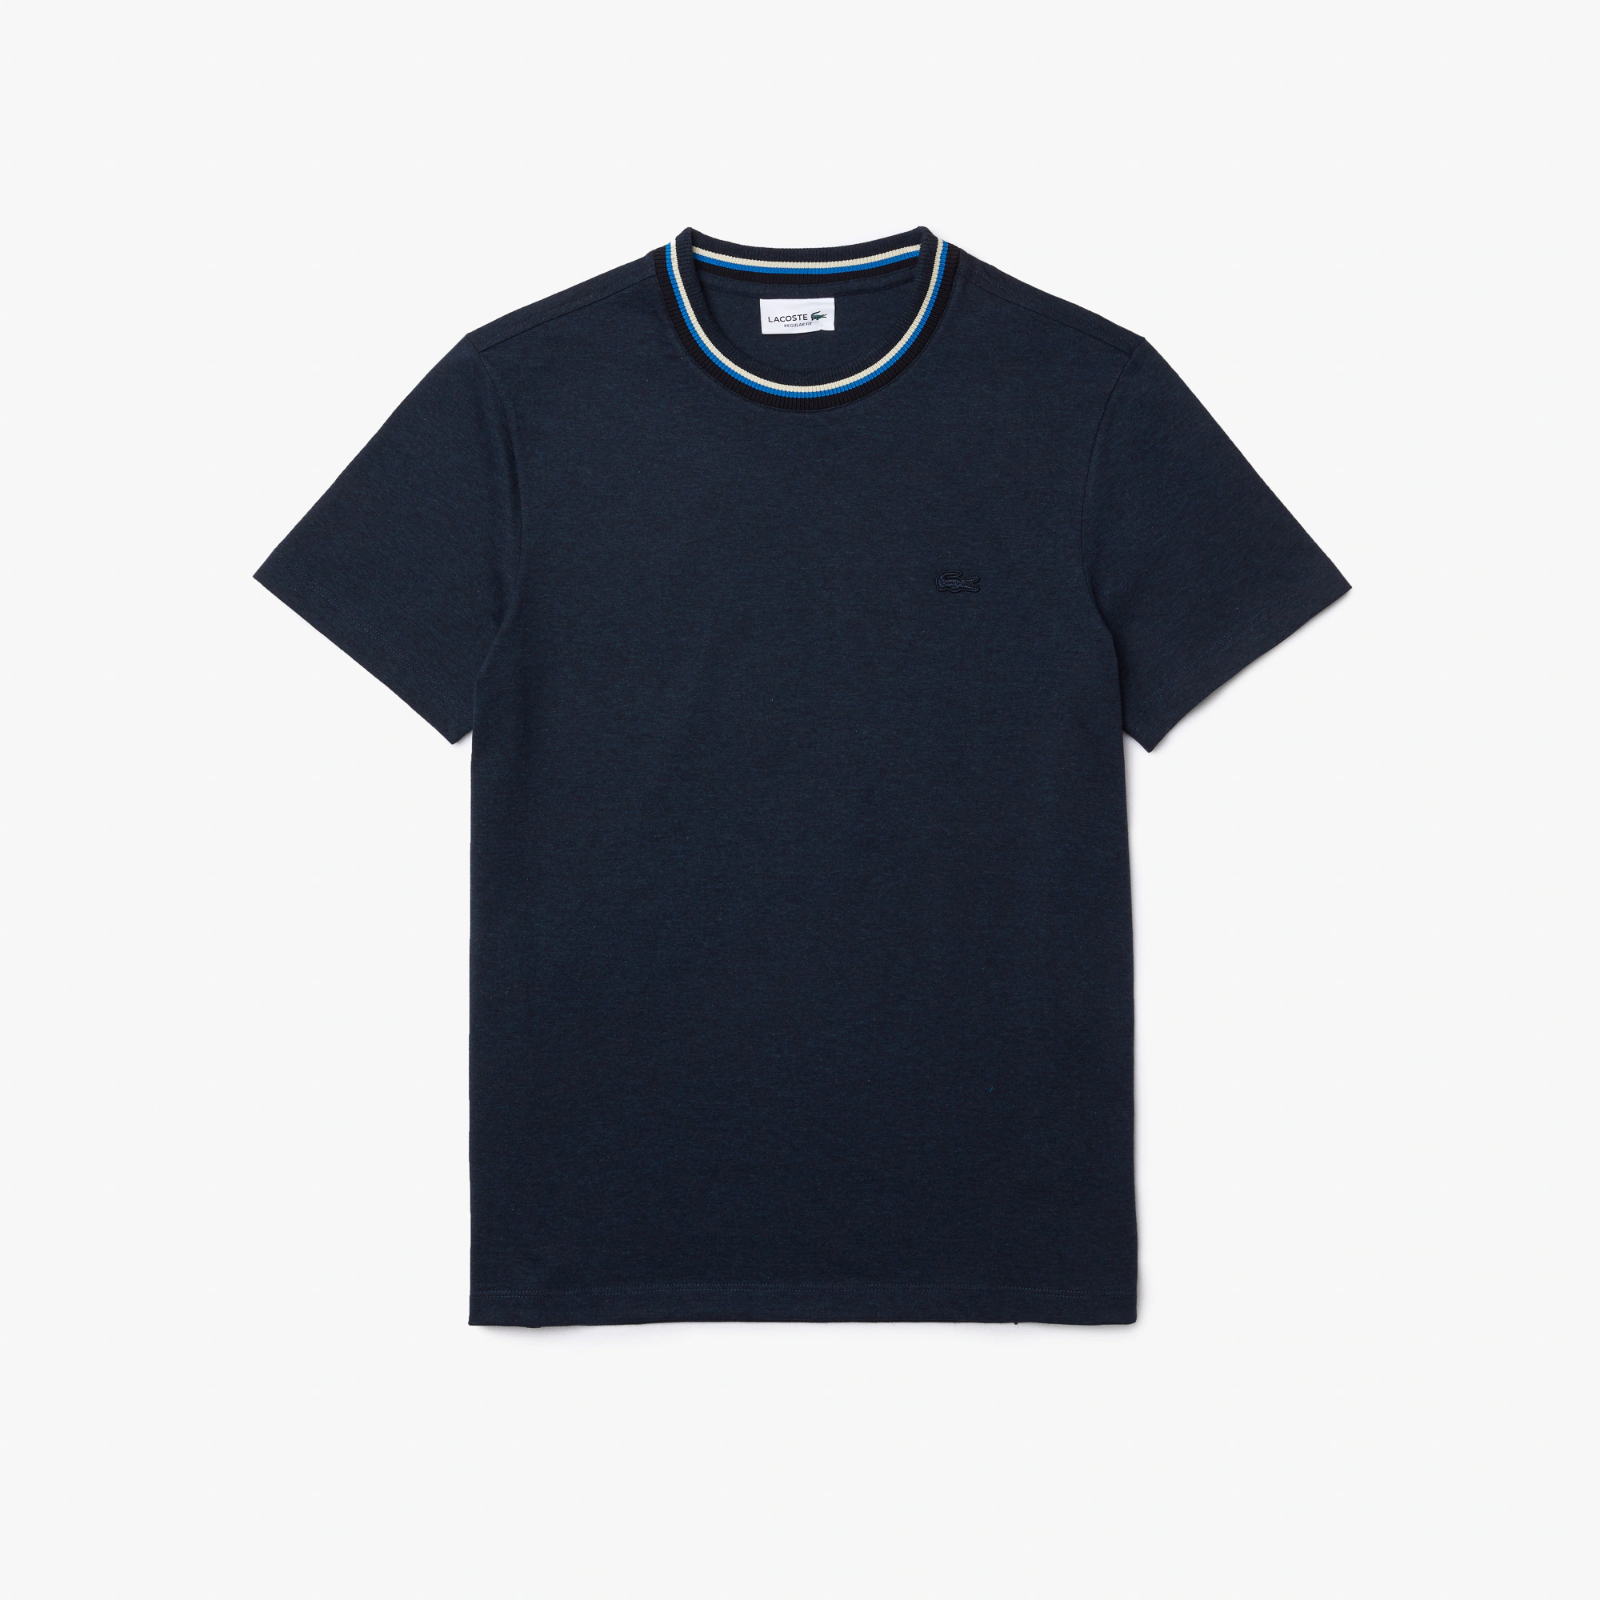 Men’s Crew Neck Striped Cotton T-Shirt TH8064-51